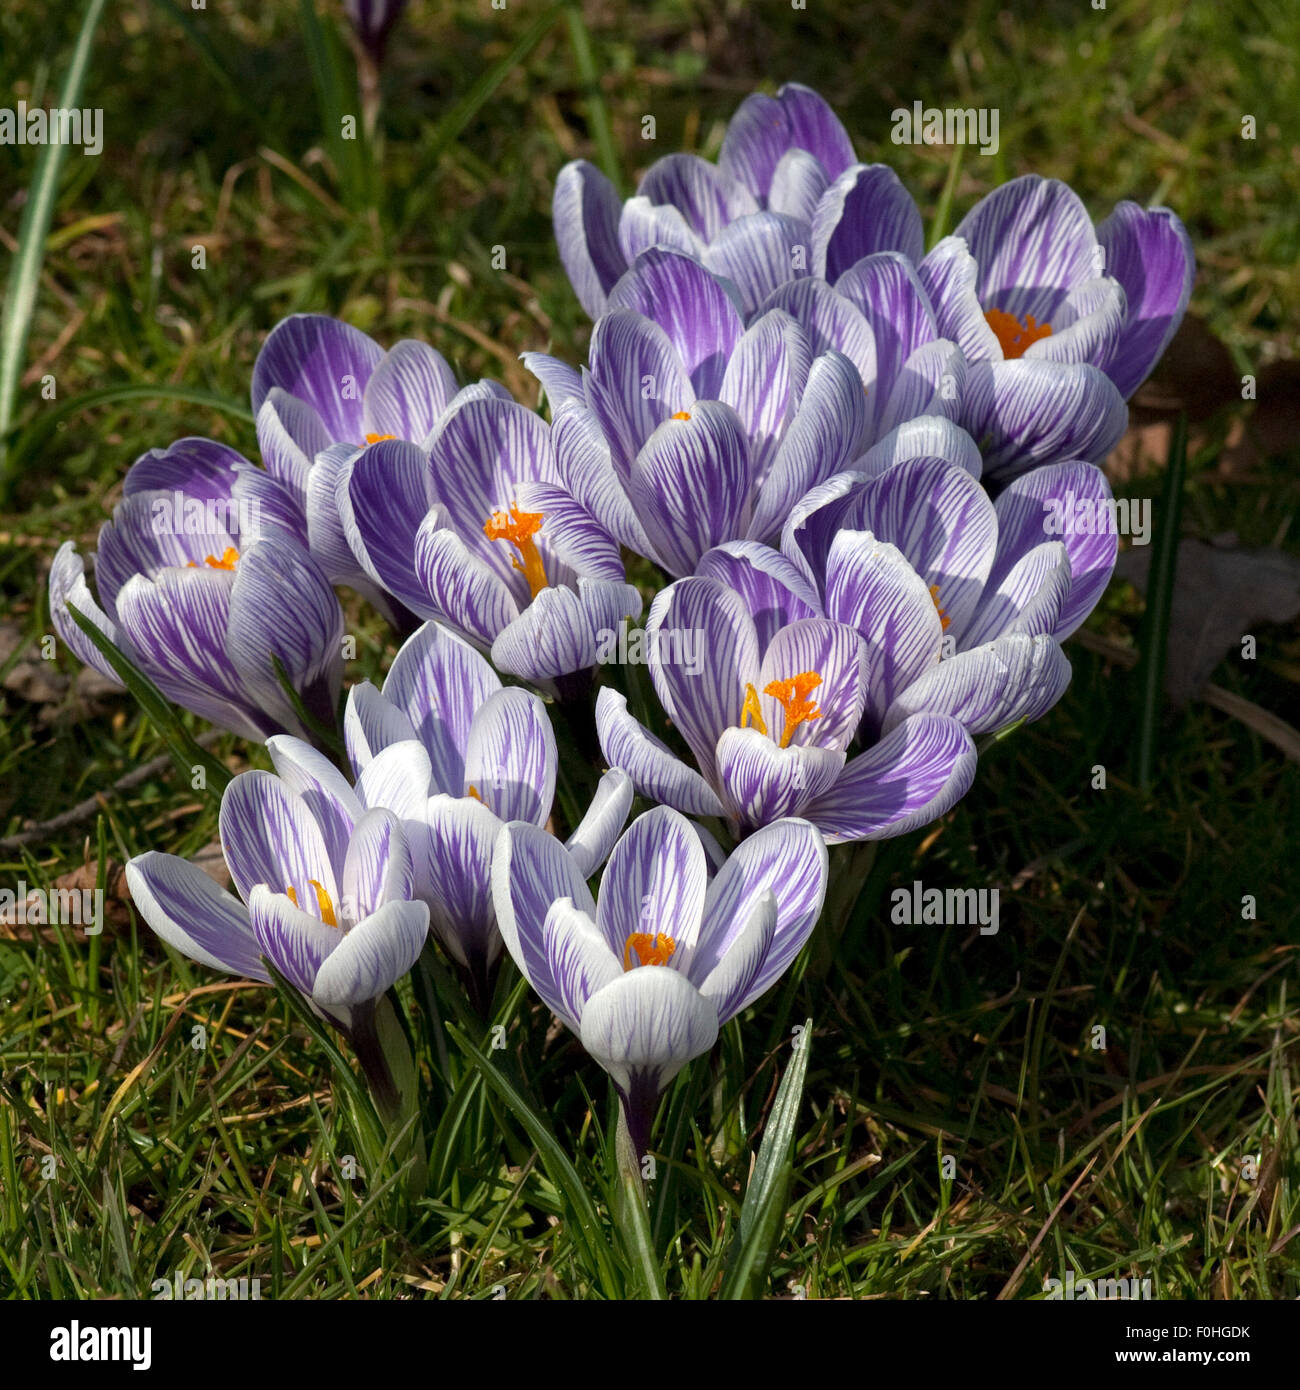 Gartenkrokus, Krokus, Crocus, Stock Photo